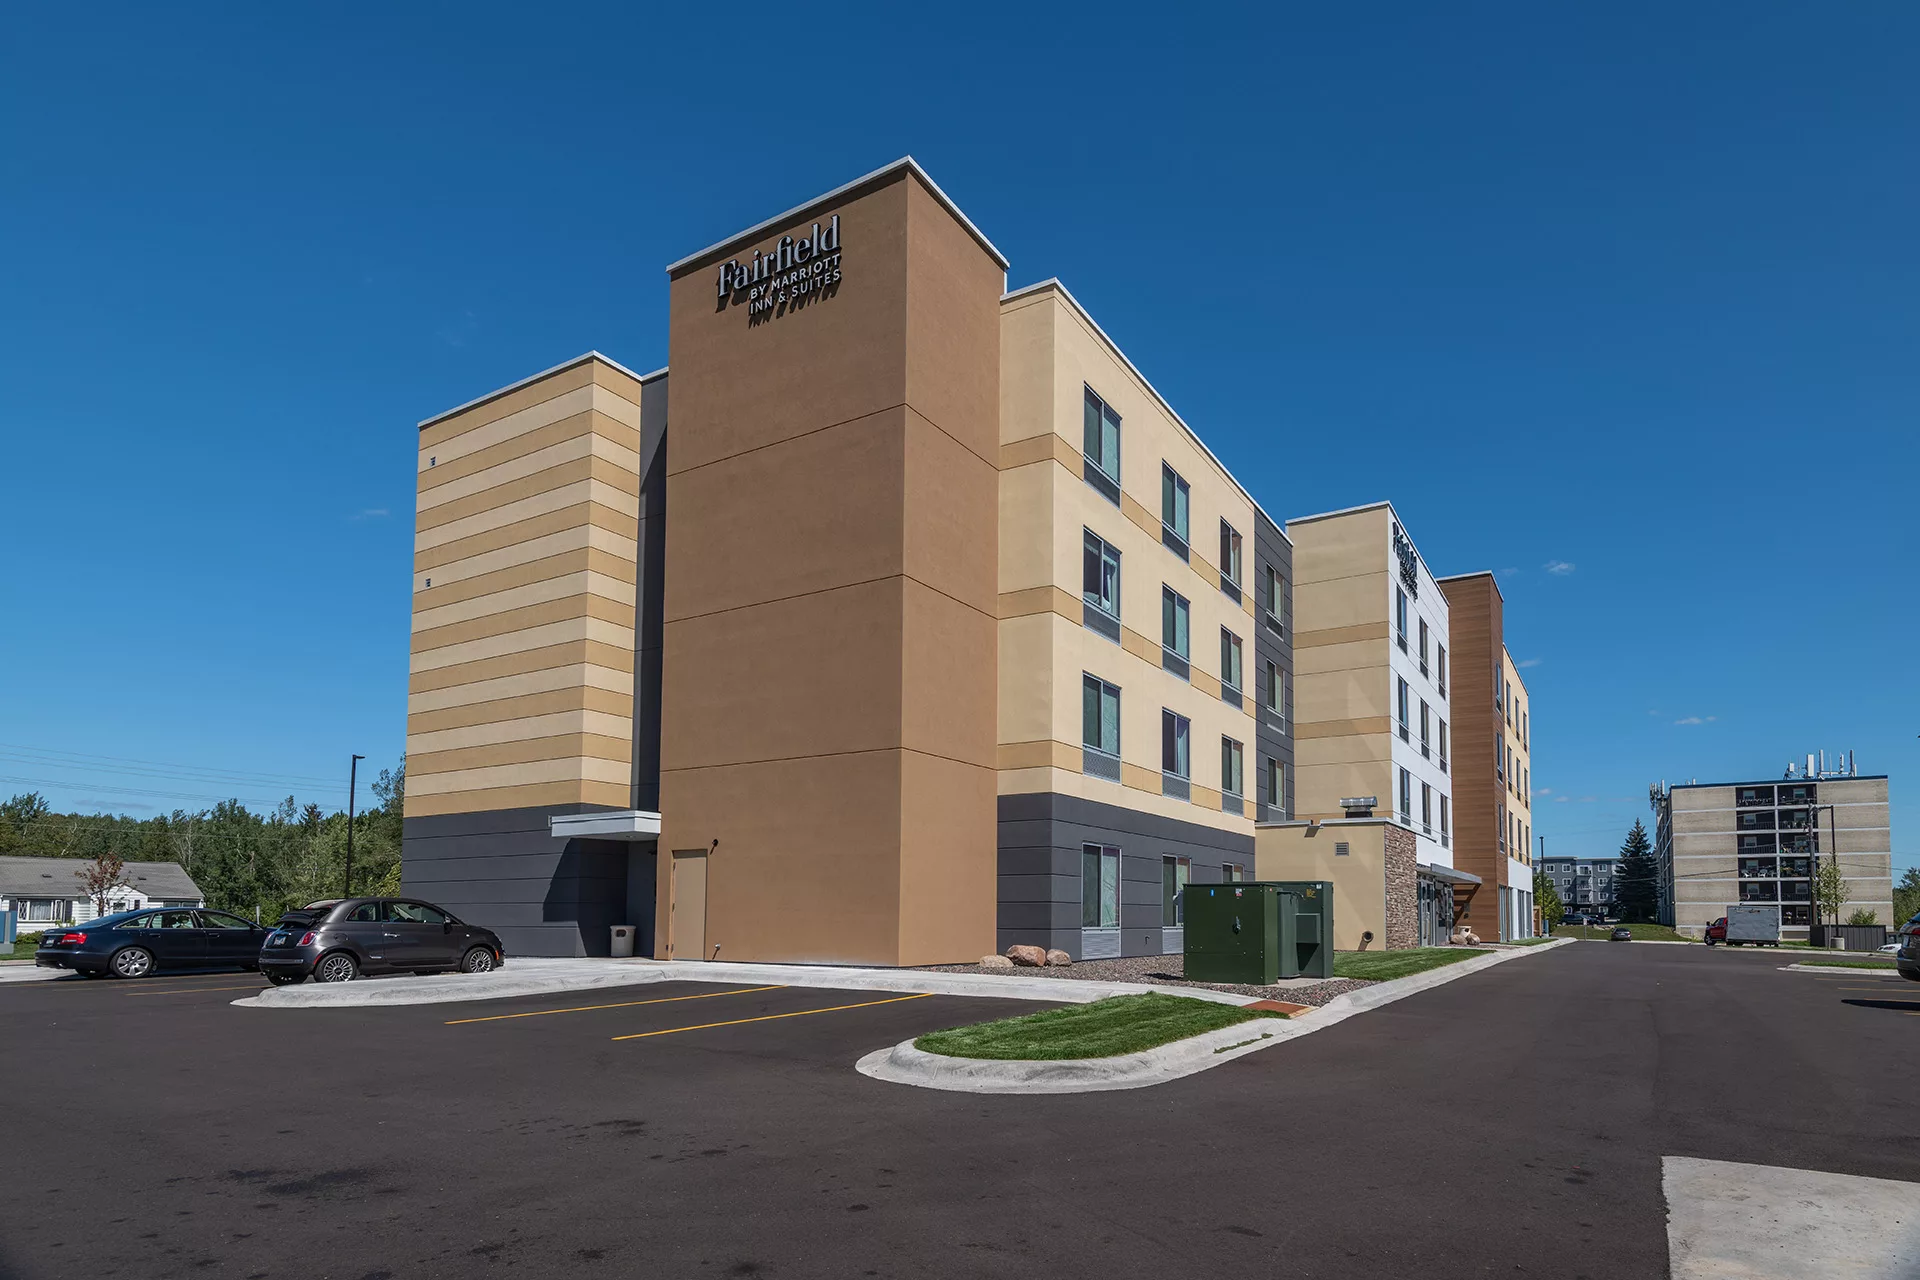 Fairfield Inn & Suites Duluth Mn Exterior2